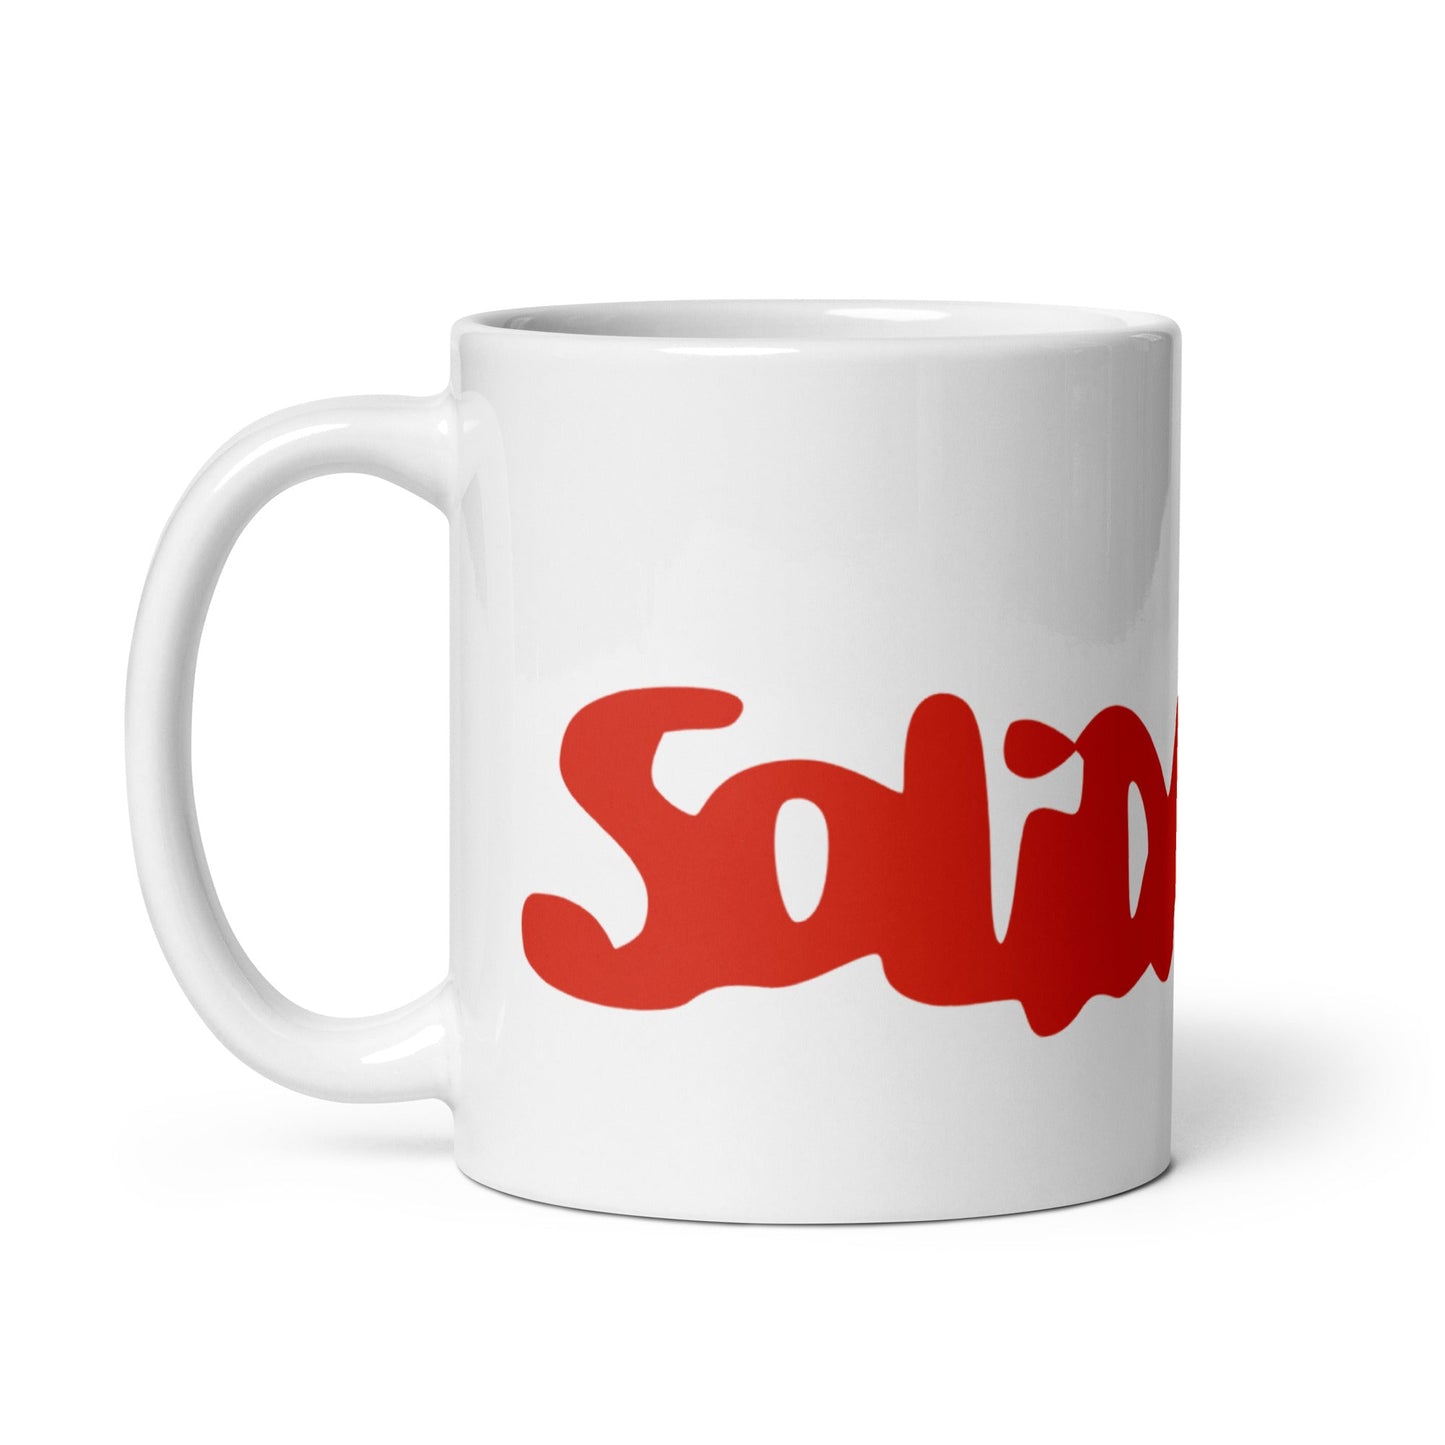 Solidarność - glossy mug - Souled Out World